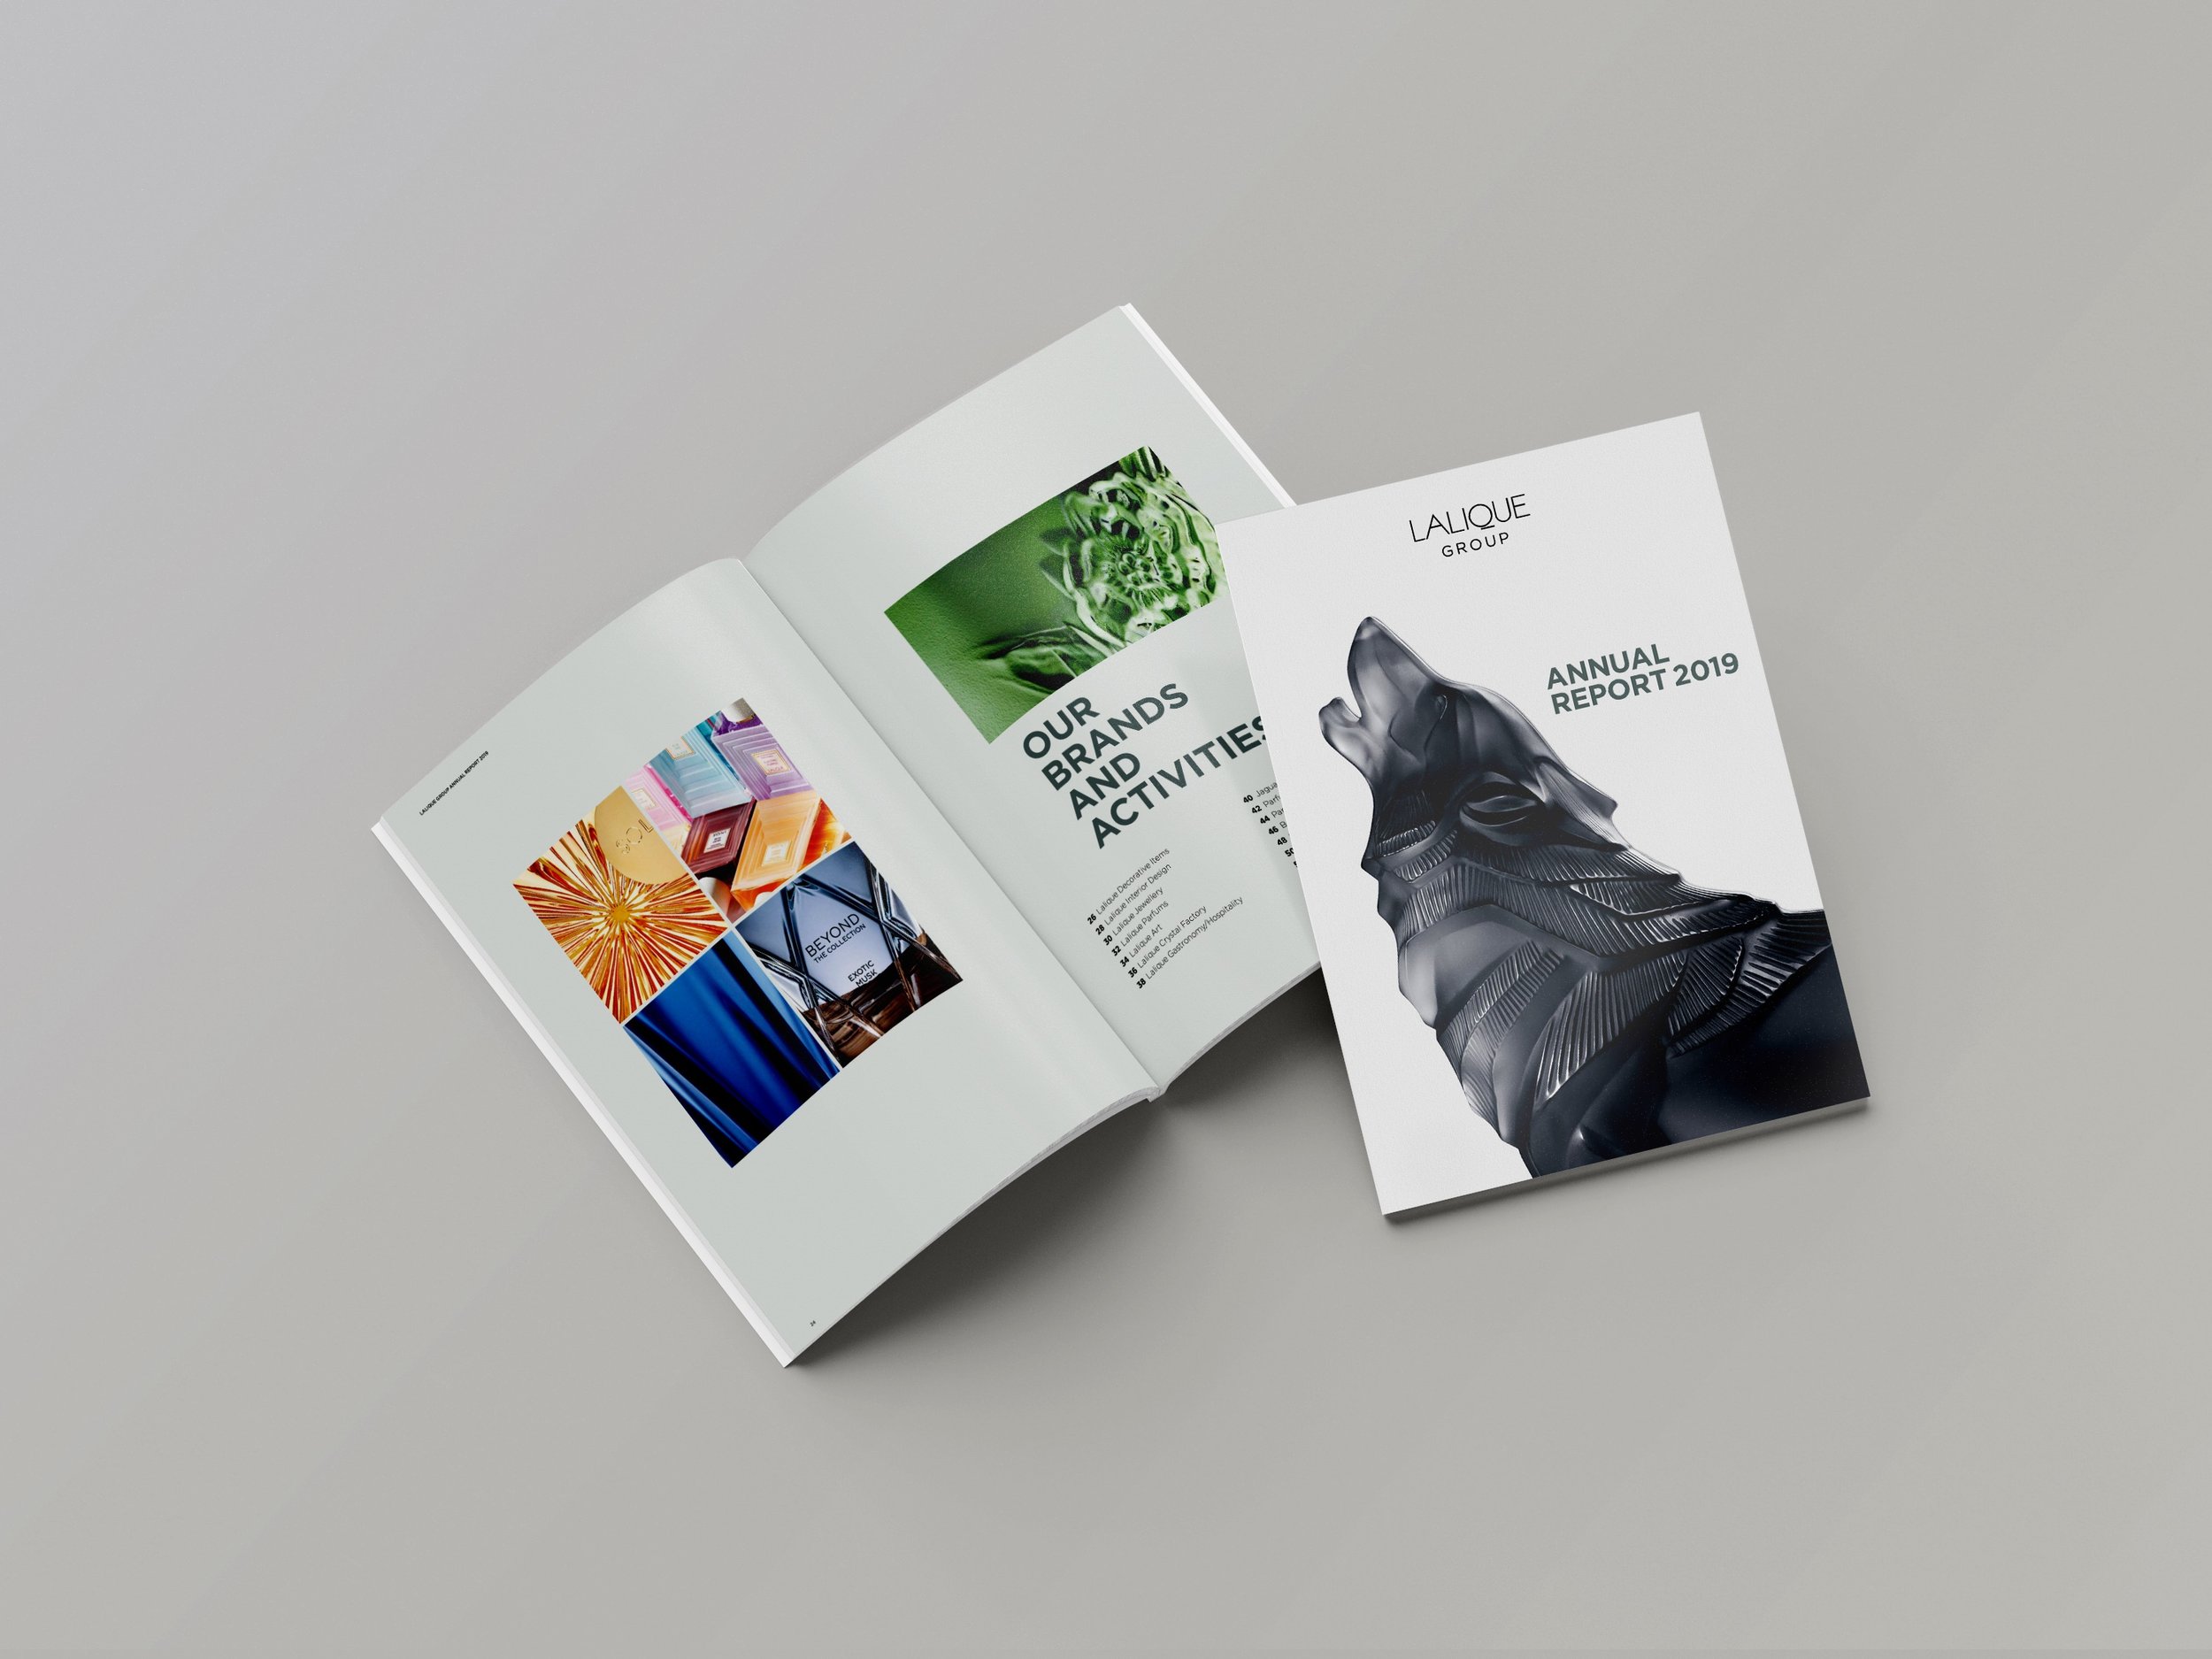 Lalique Annual Report 2019 Cover